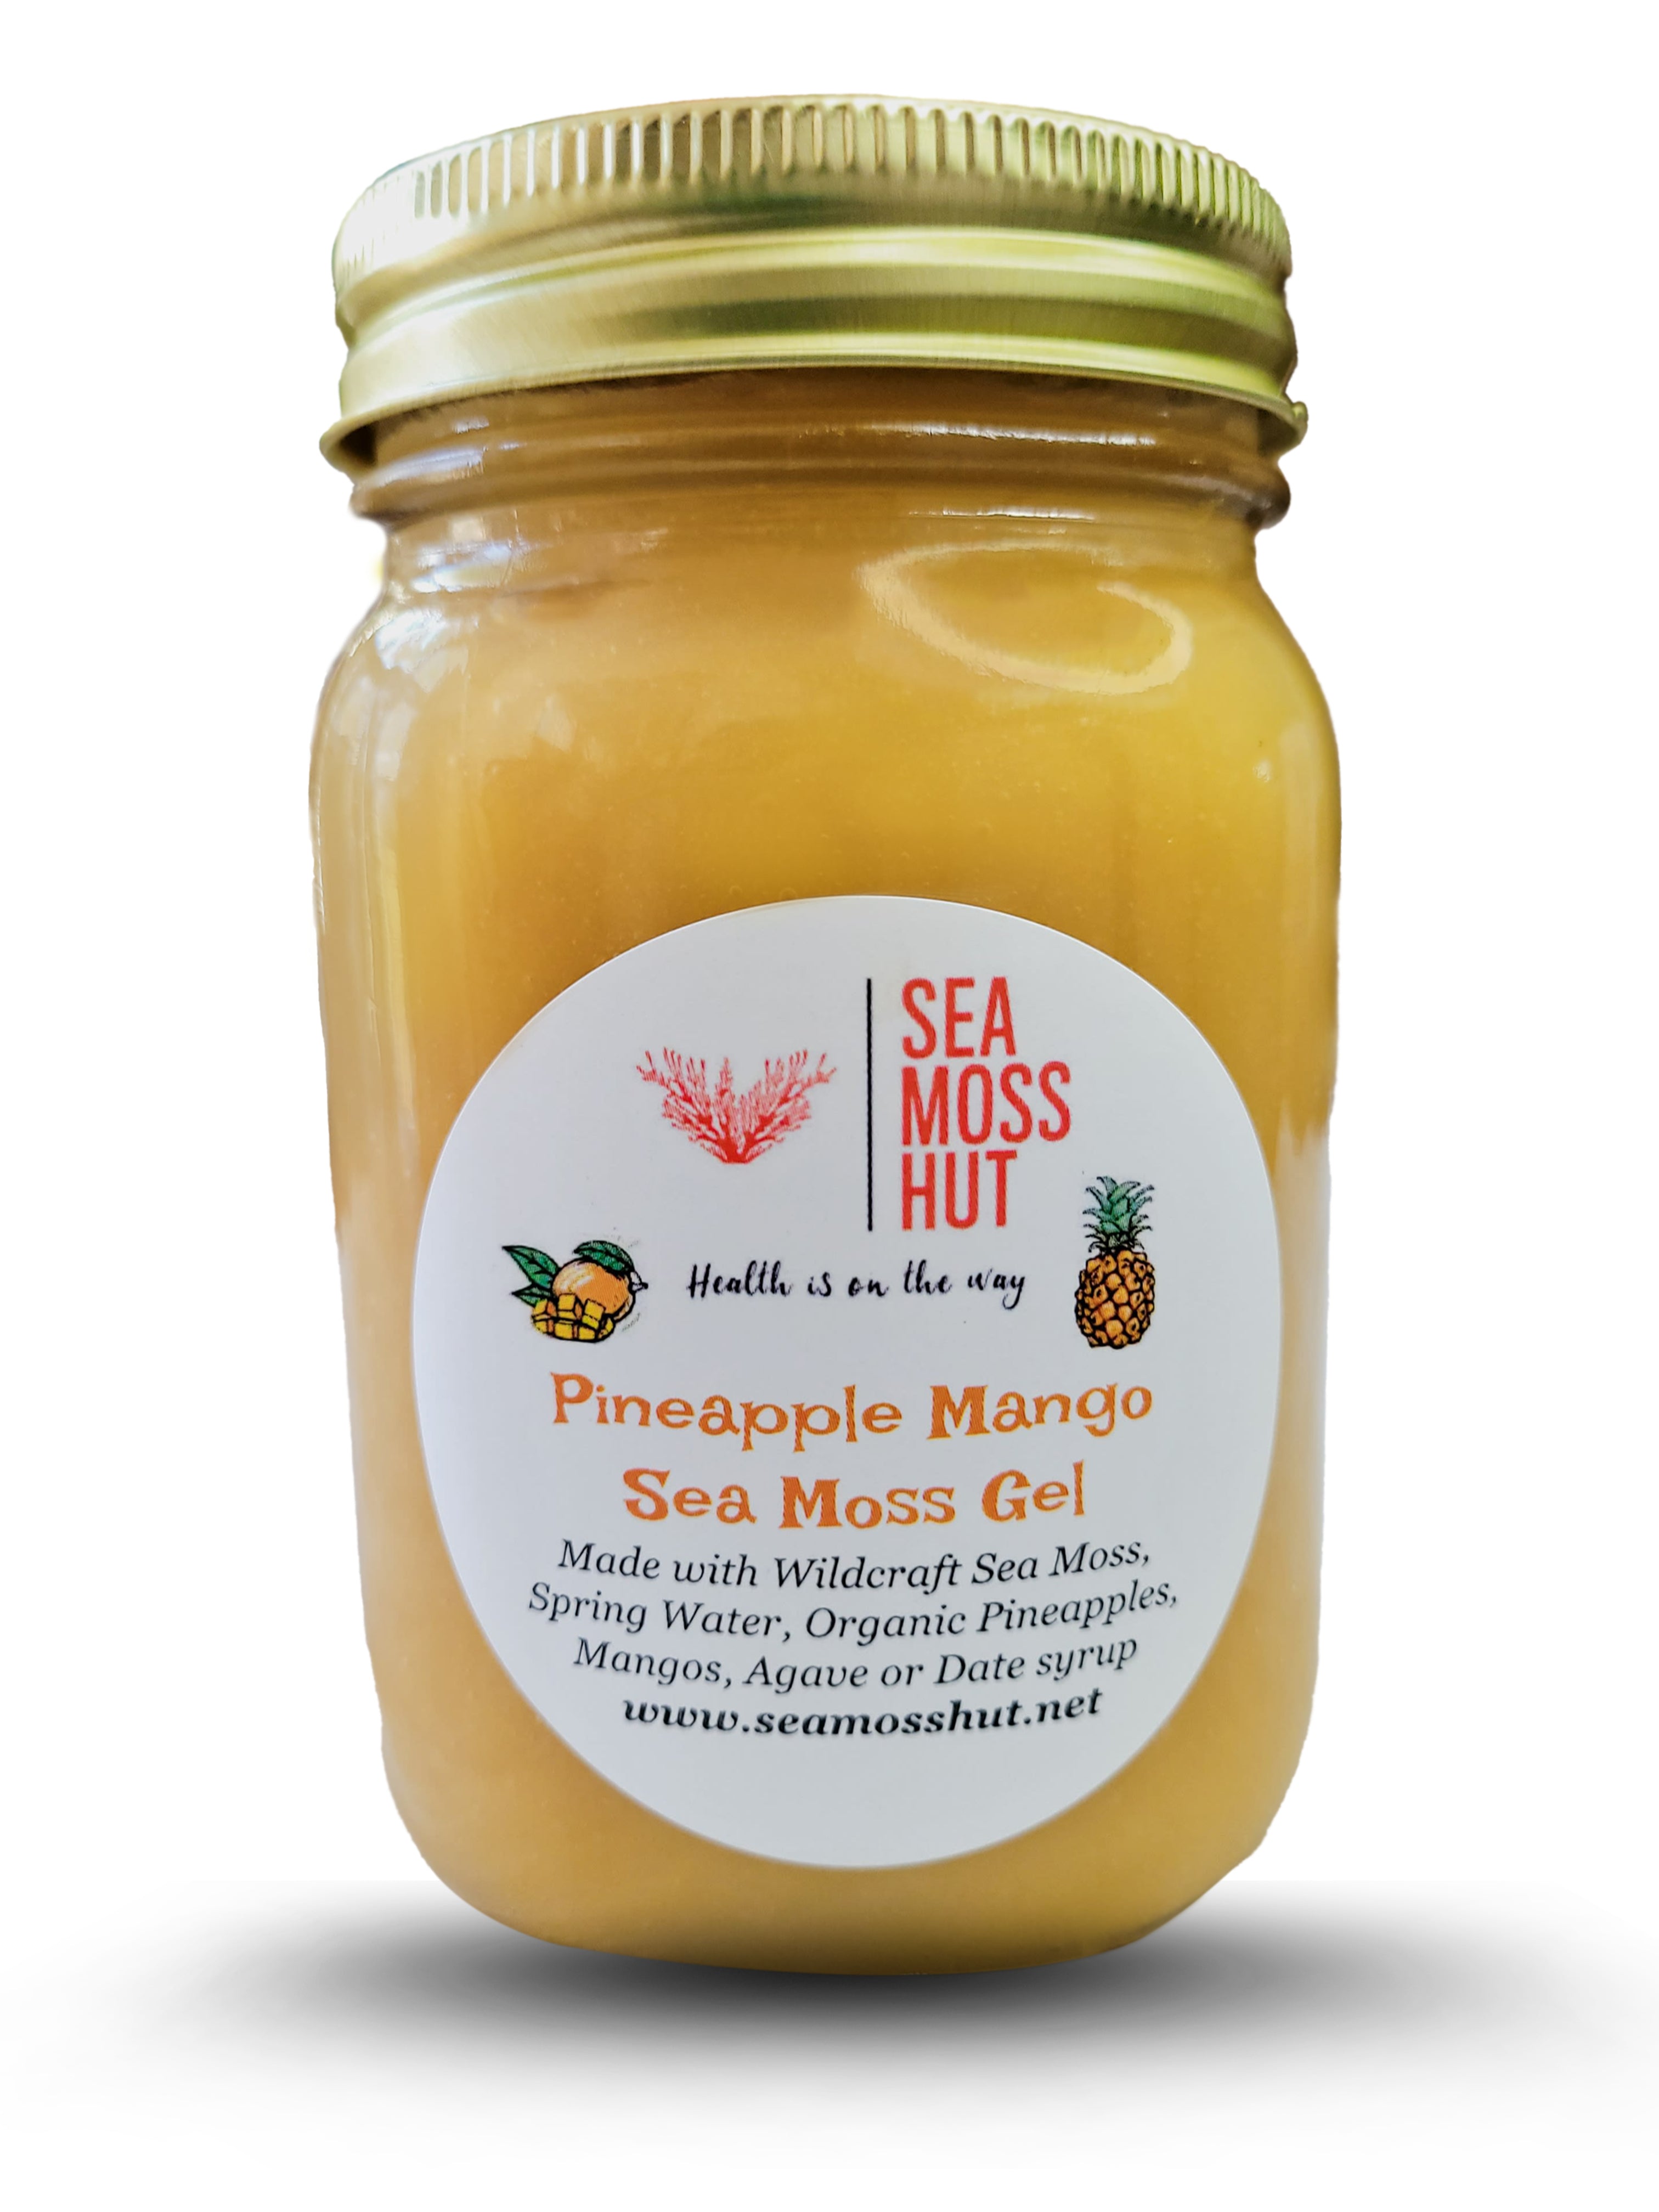 Pineapple Mango Sea Moss Gel